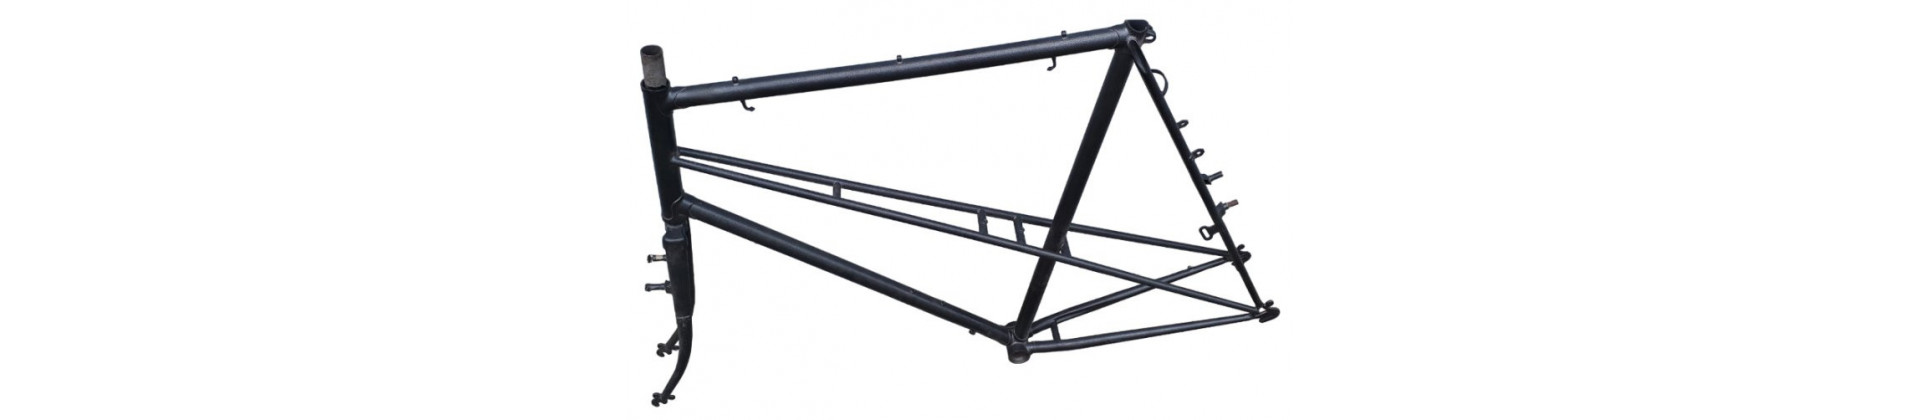 Fixie bike frame kit